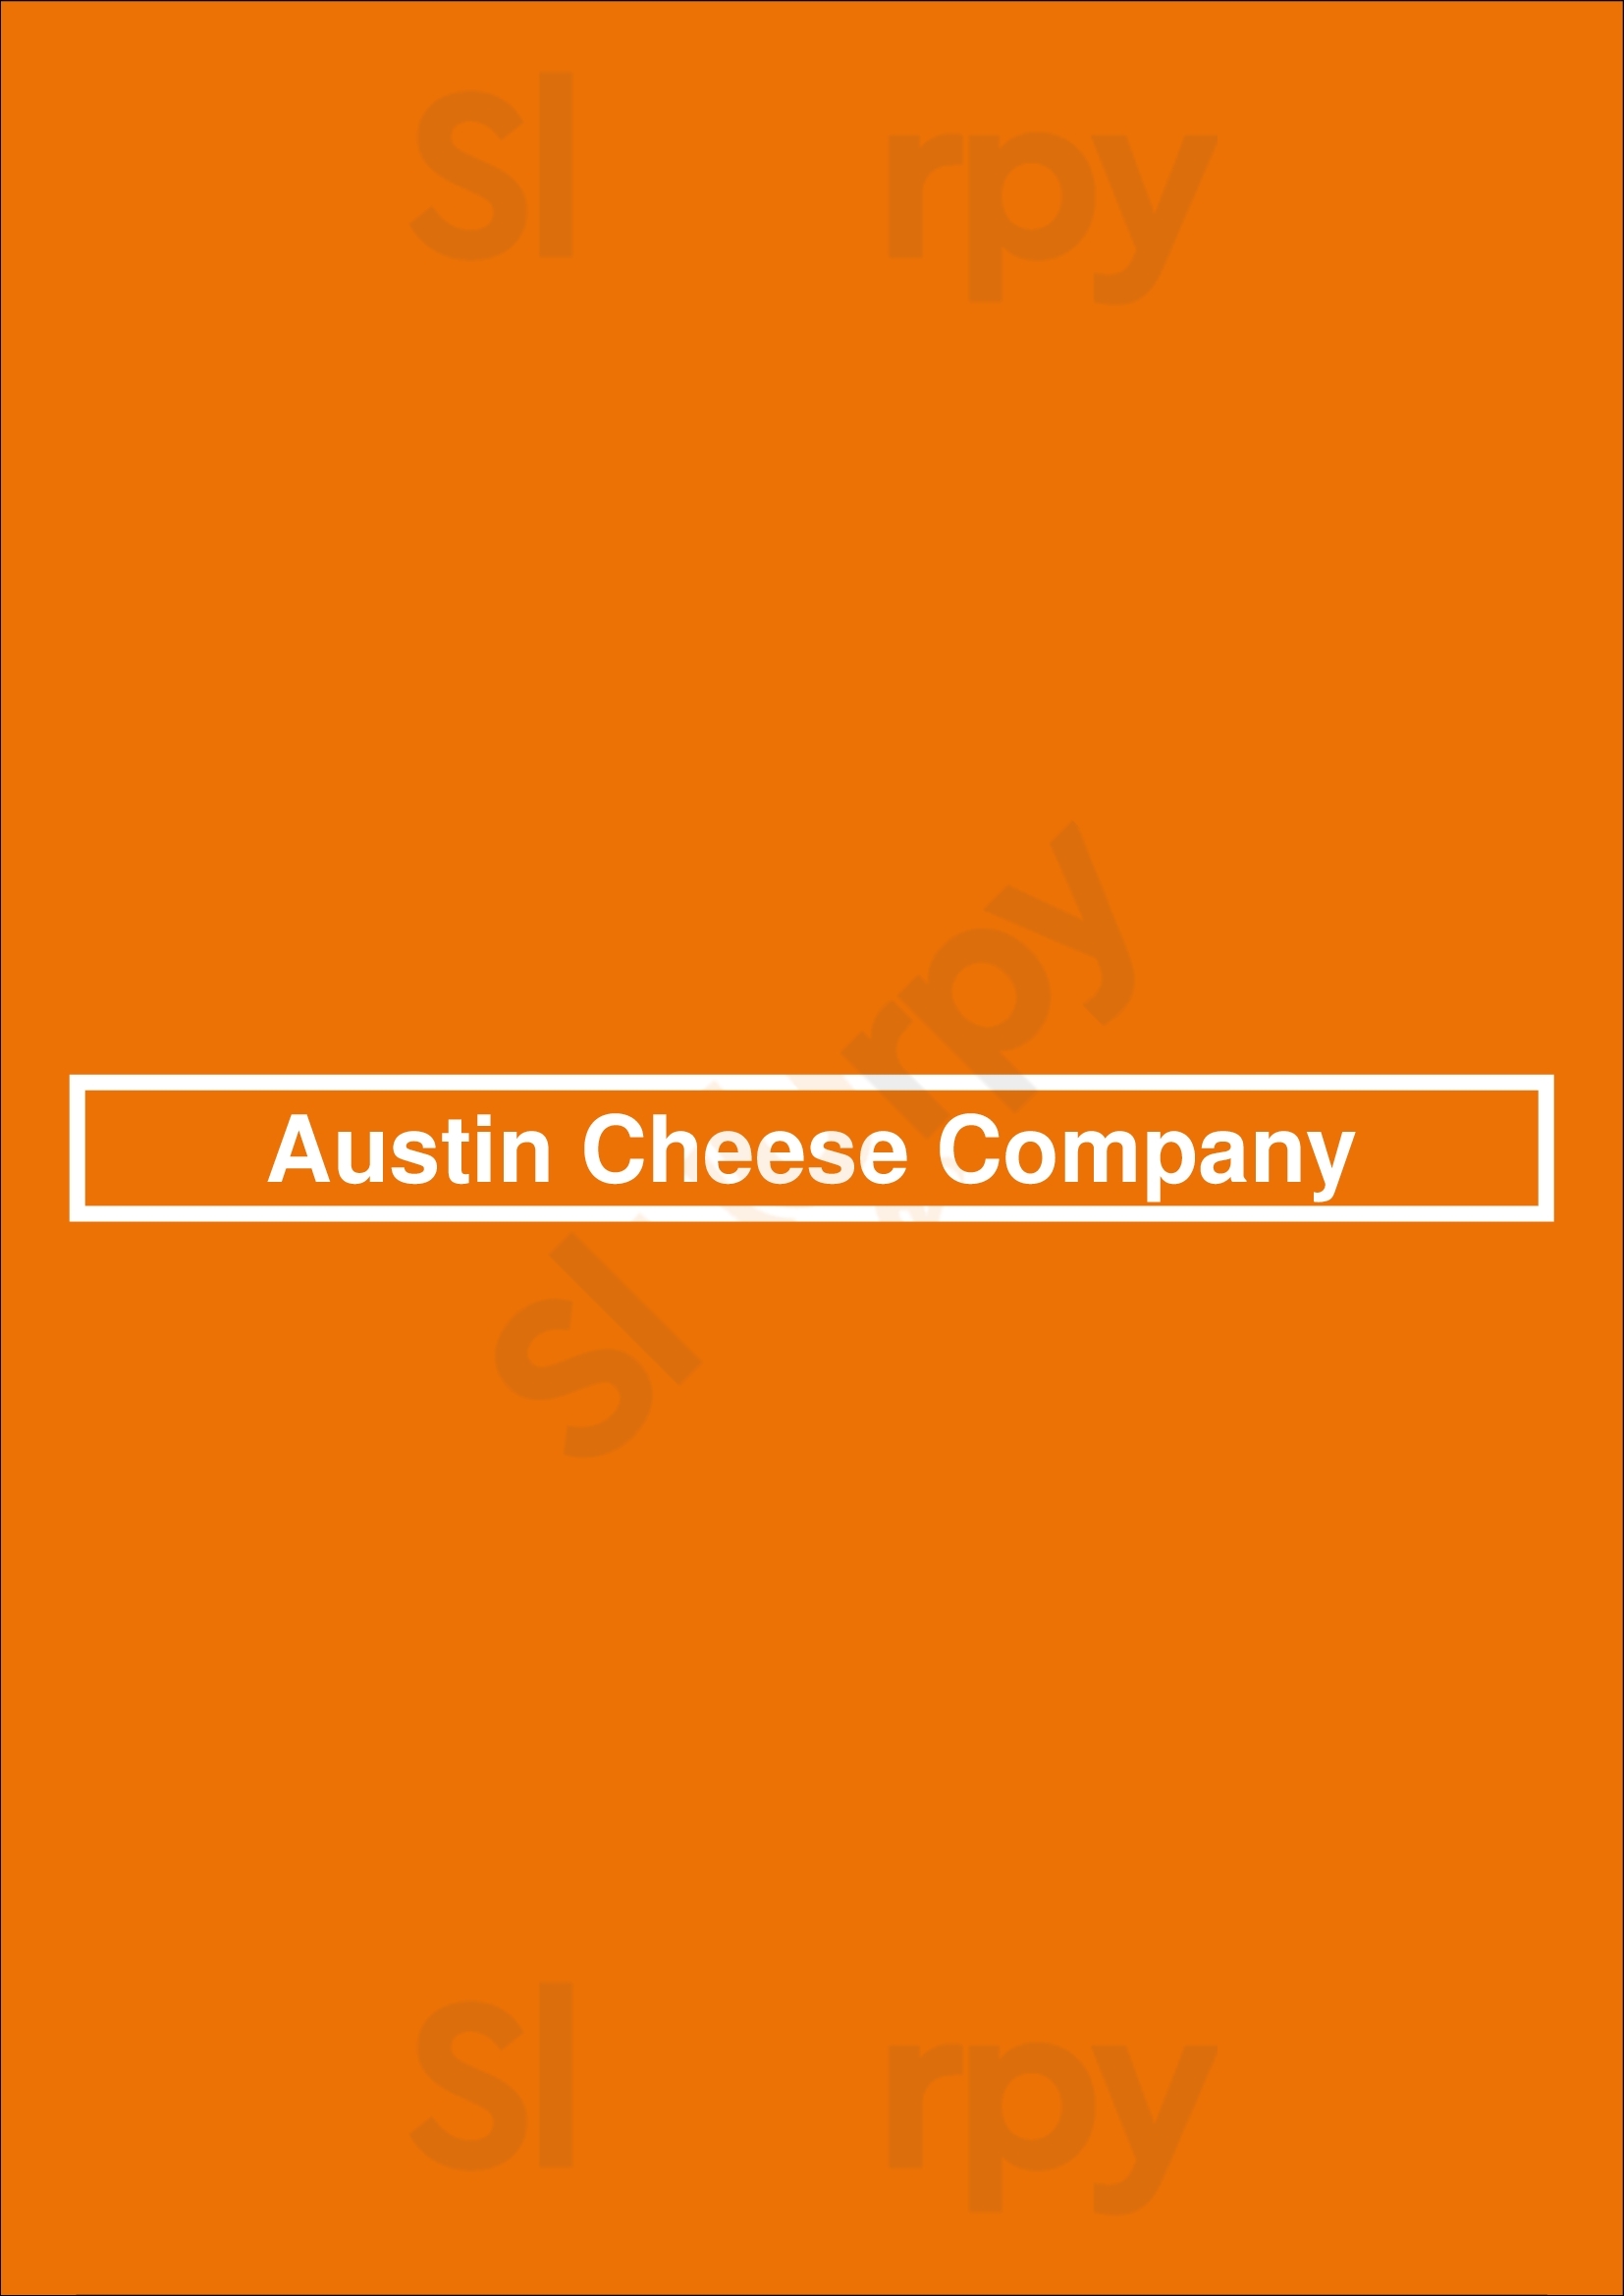 Austin Cheese Company Austin Menu - 1